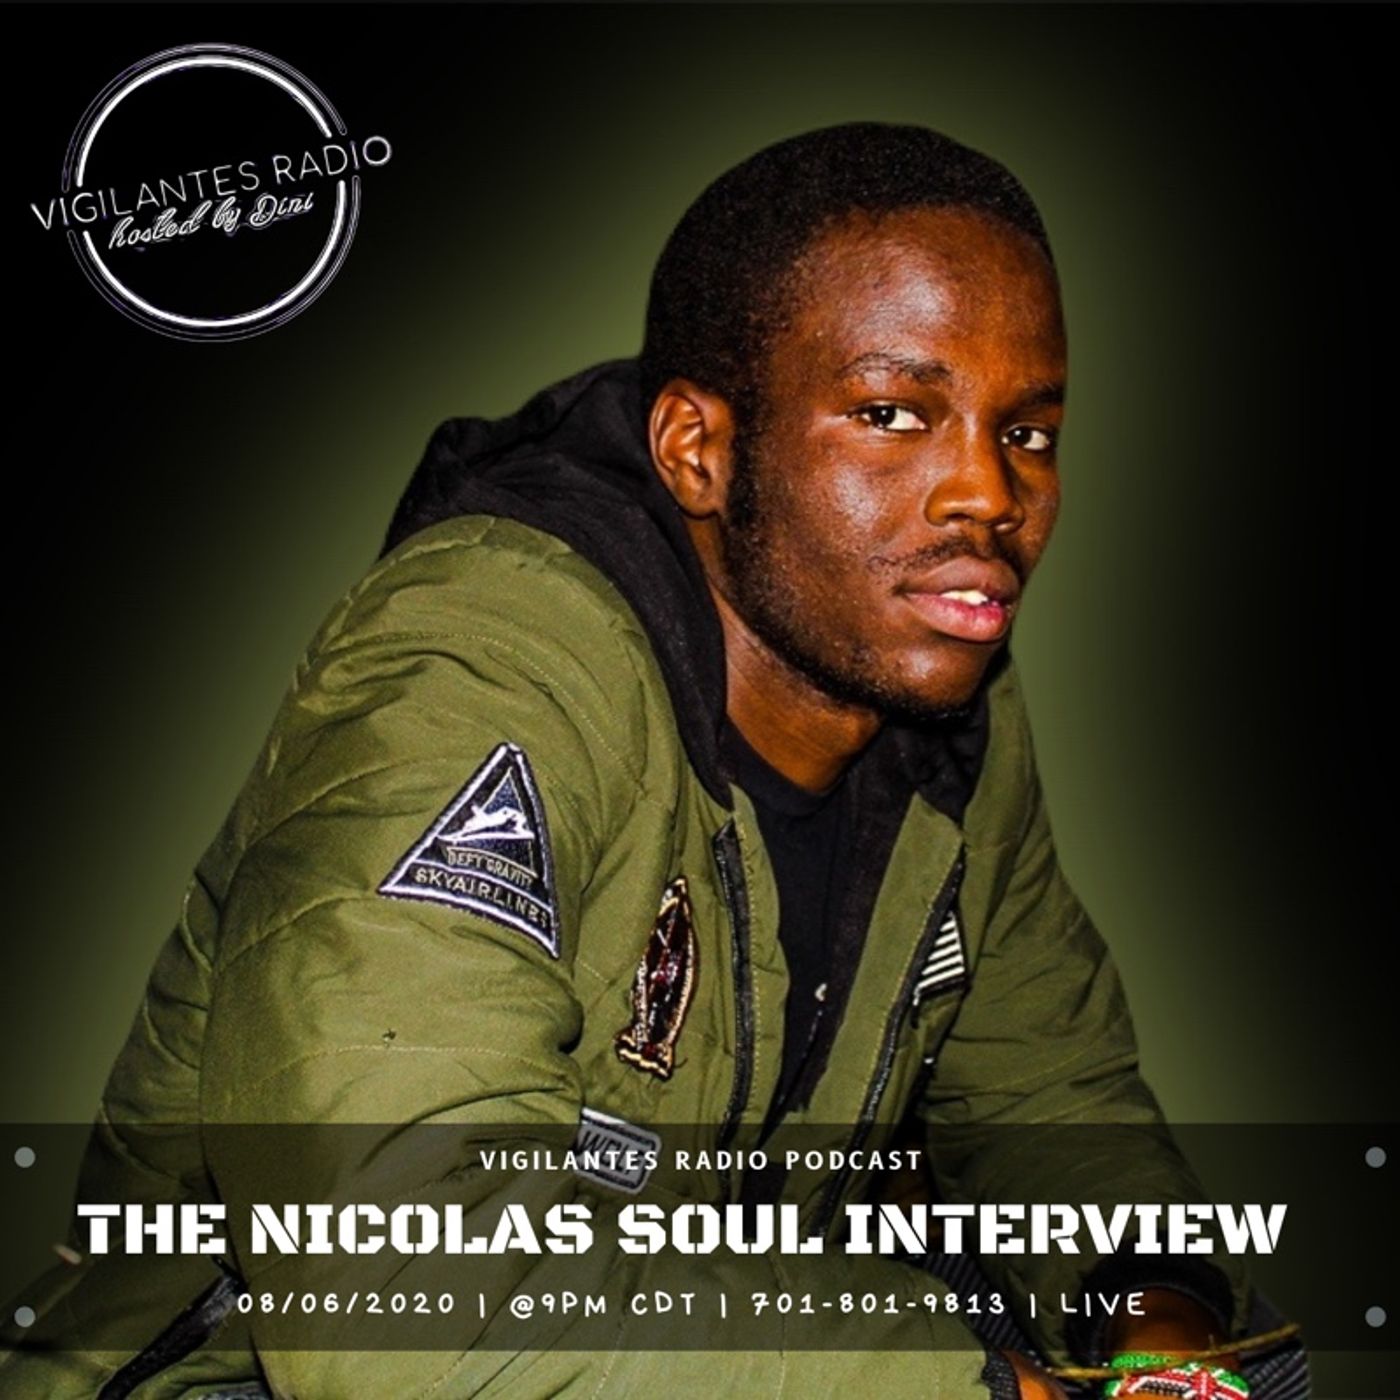 The Nicolas Soul Interview. Image